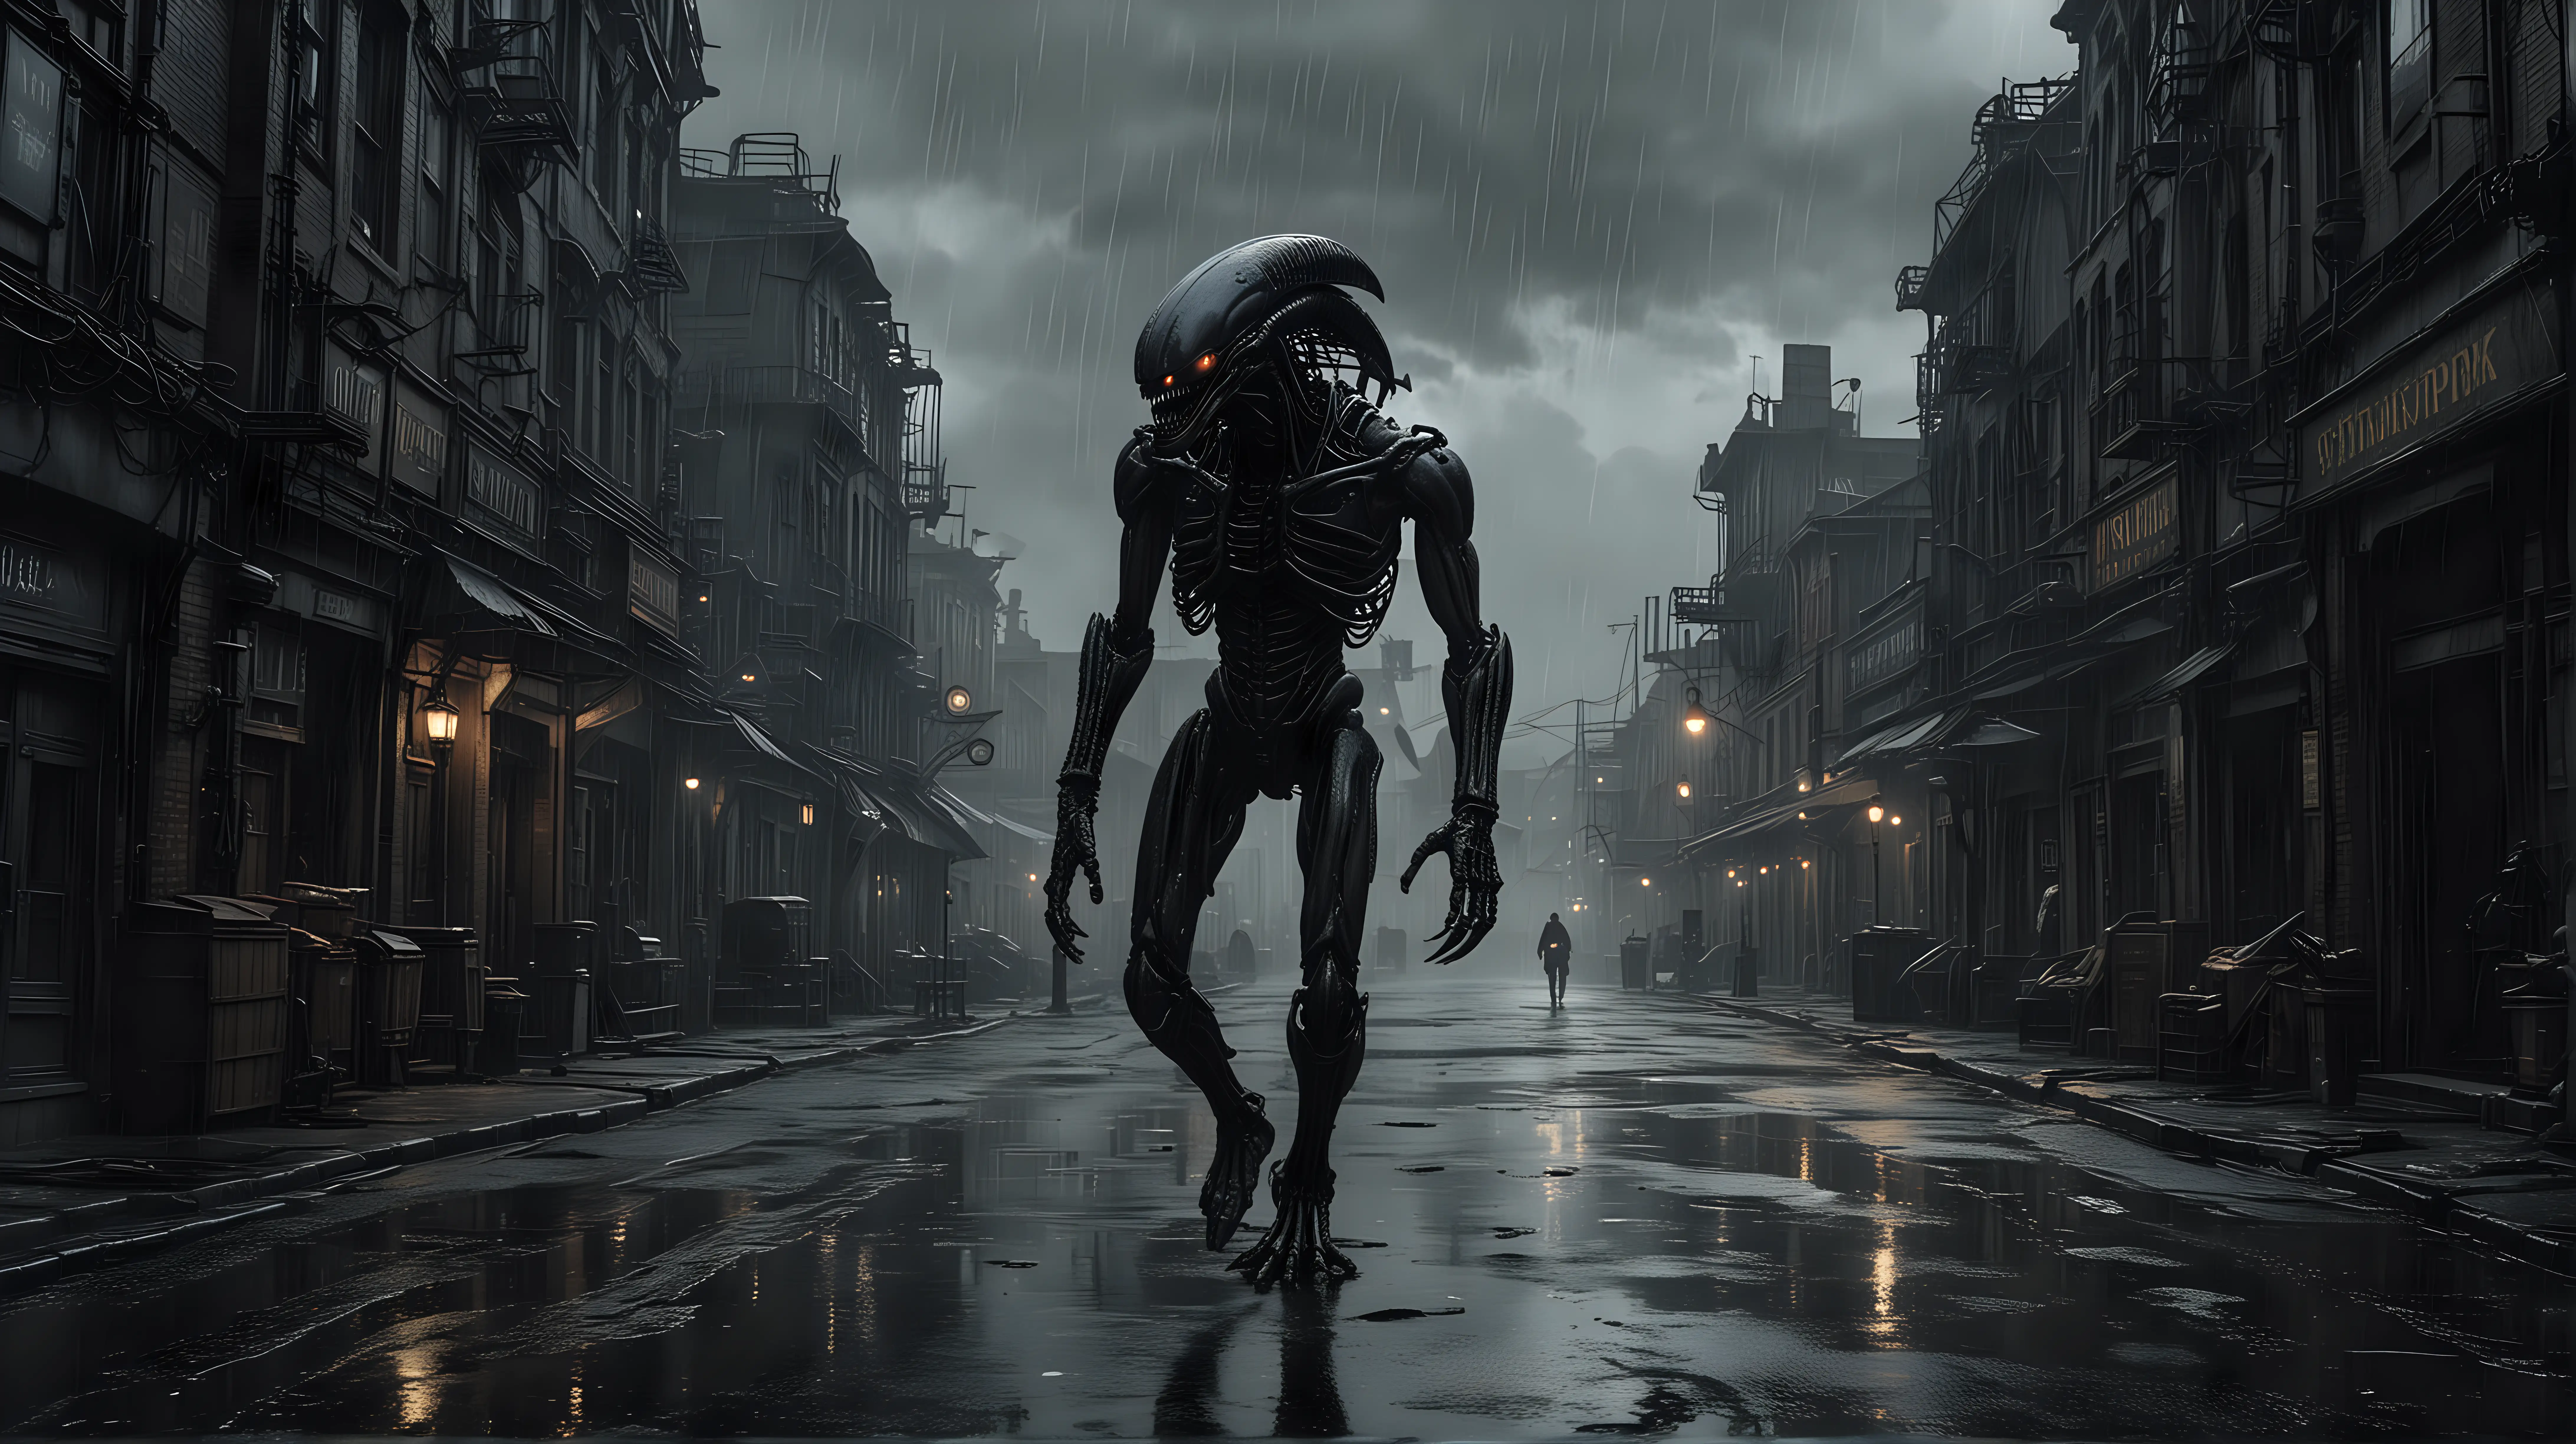 Xenomorph Strolls Through Steampunk City in Heavy Rain